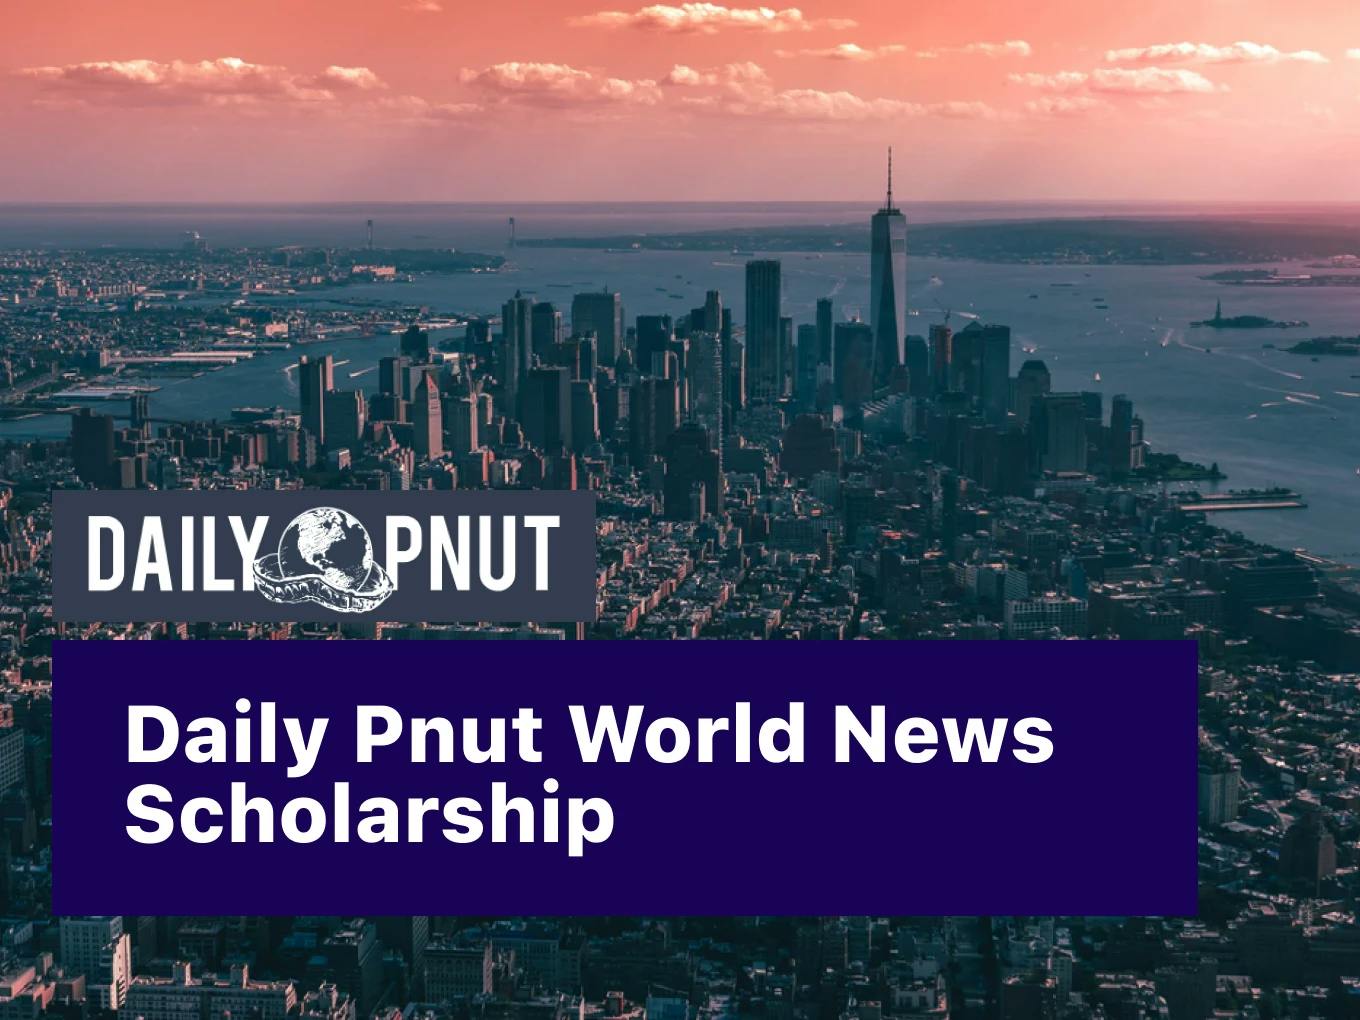 Daily Pnut World News No-Essay Scholarship